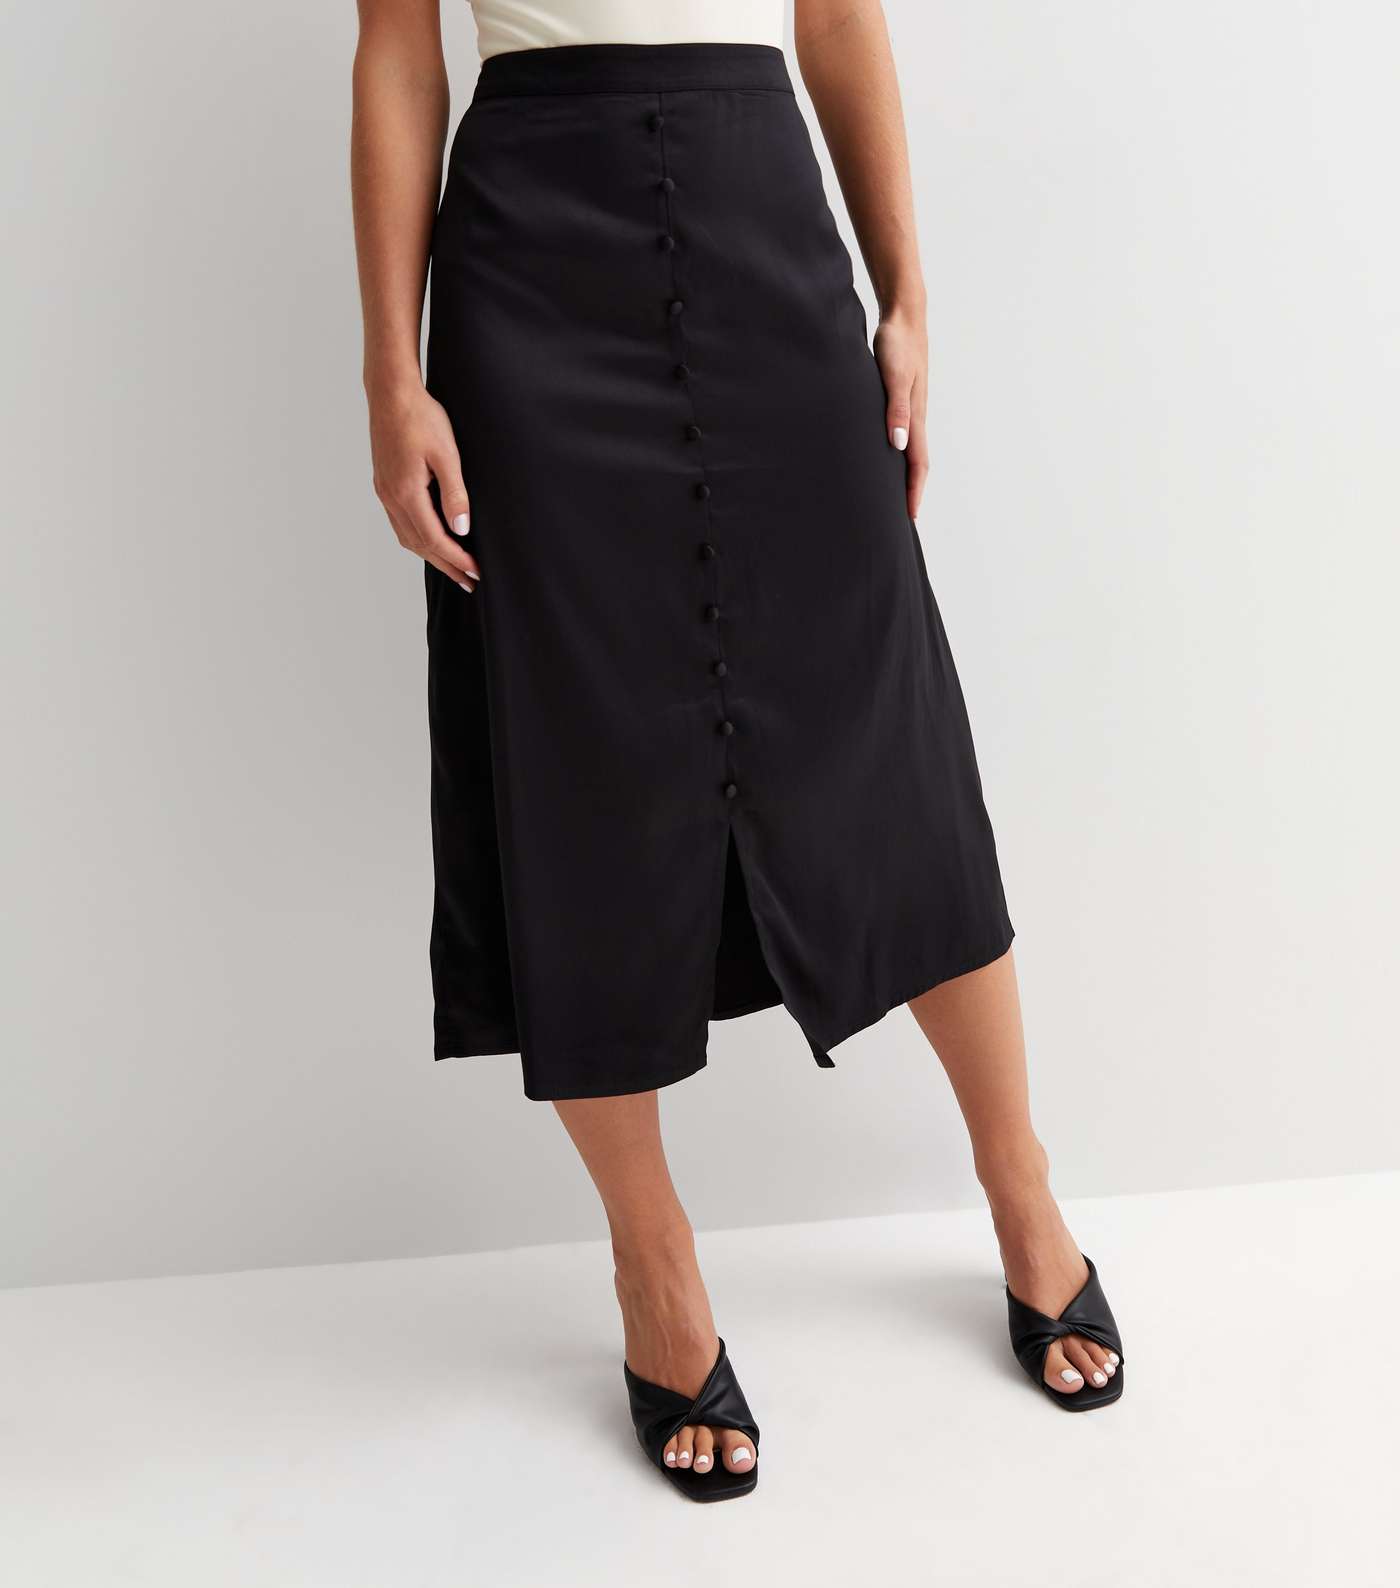 Petite Black Satin Button Midi Skirt Image 2